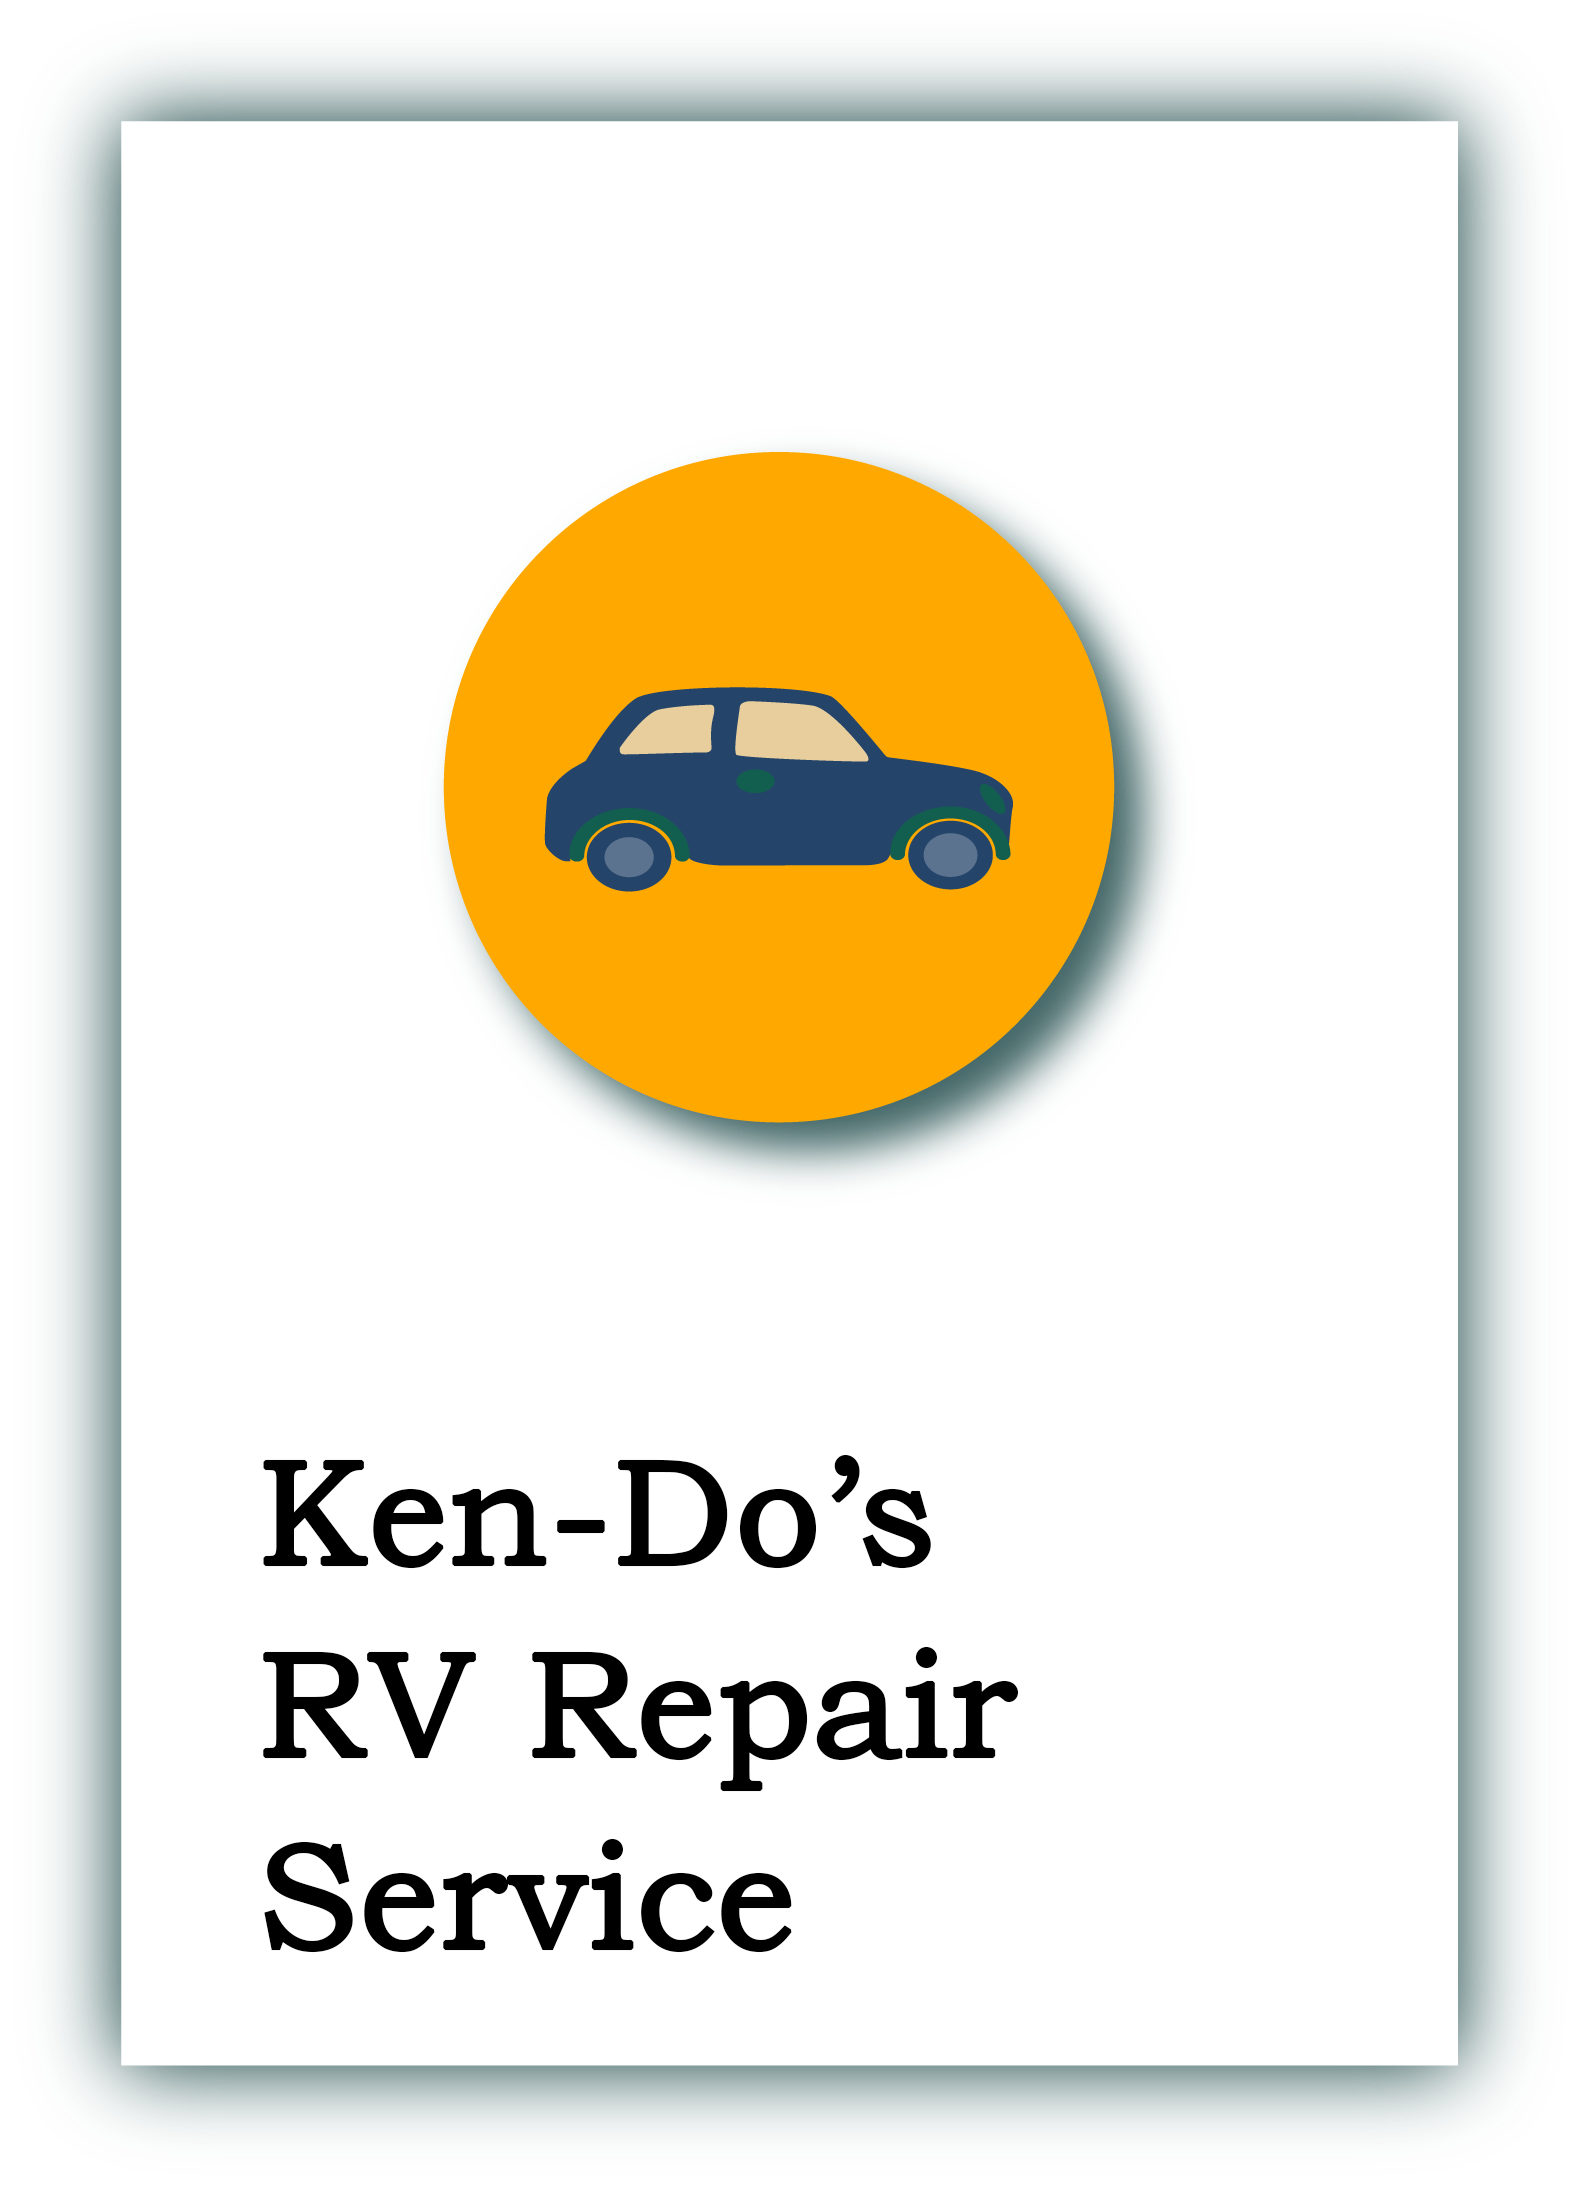 Ken Do's RV Repair Service